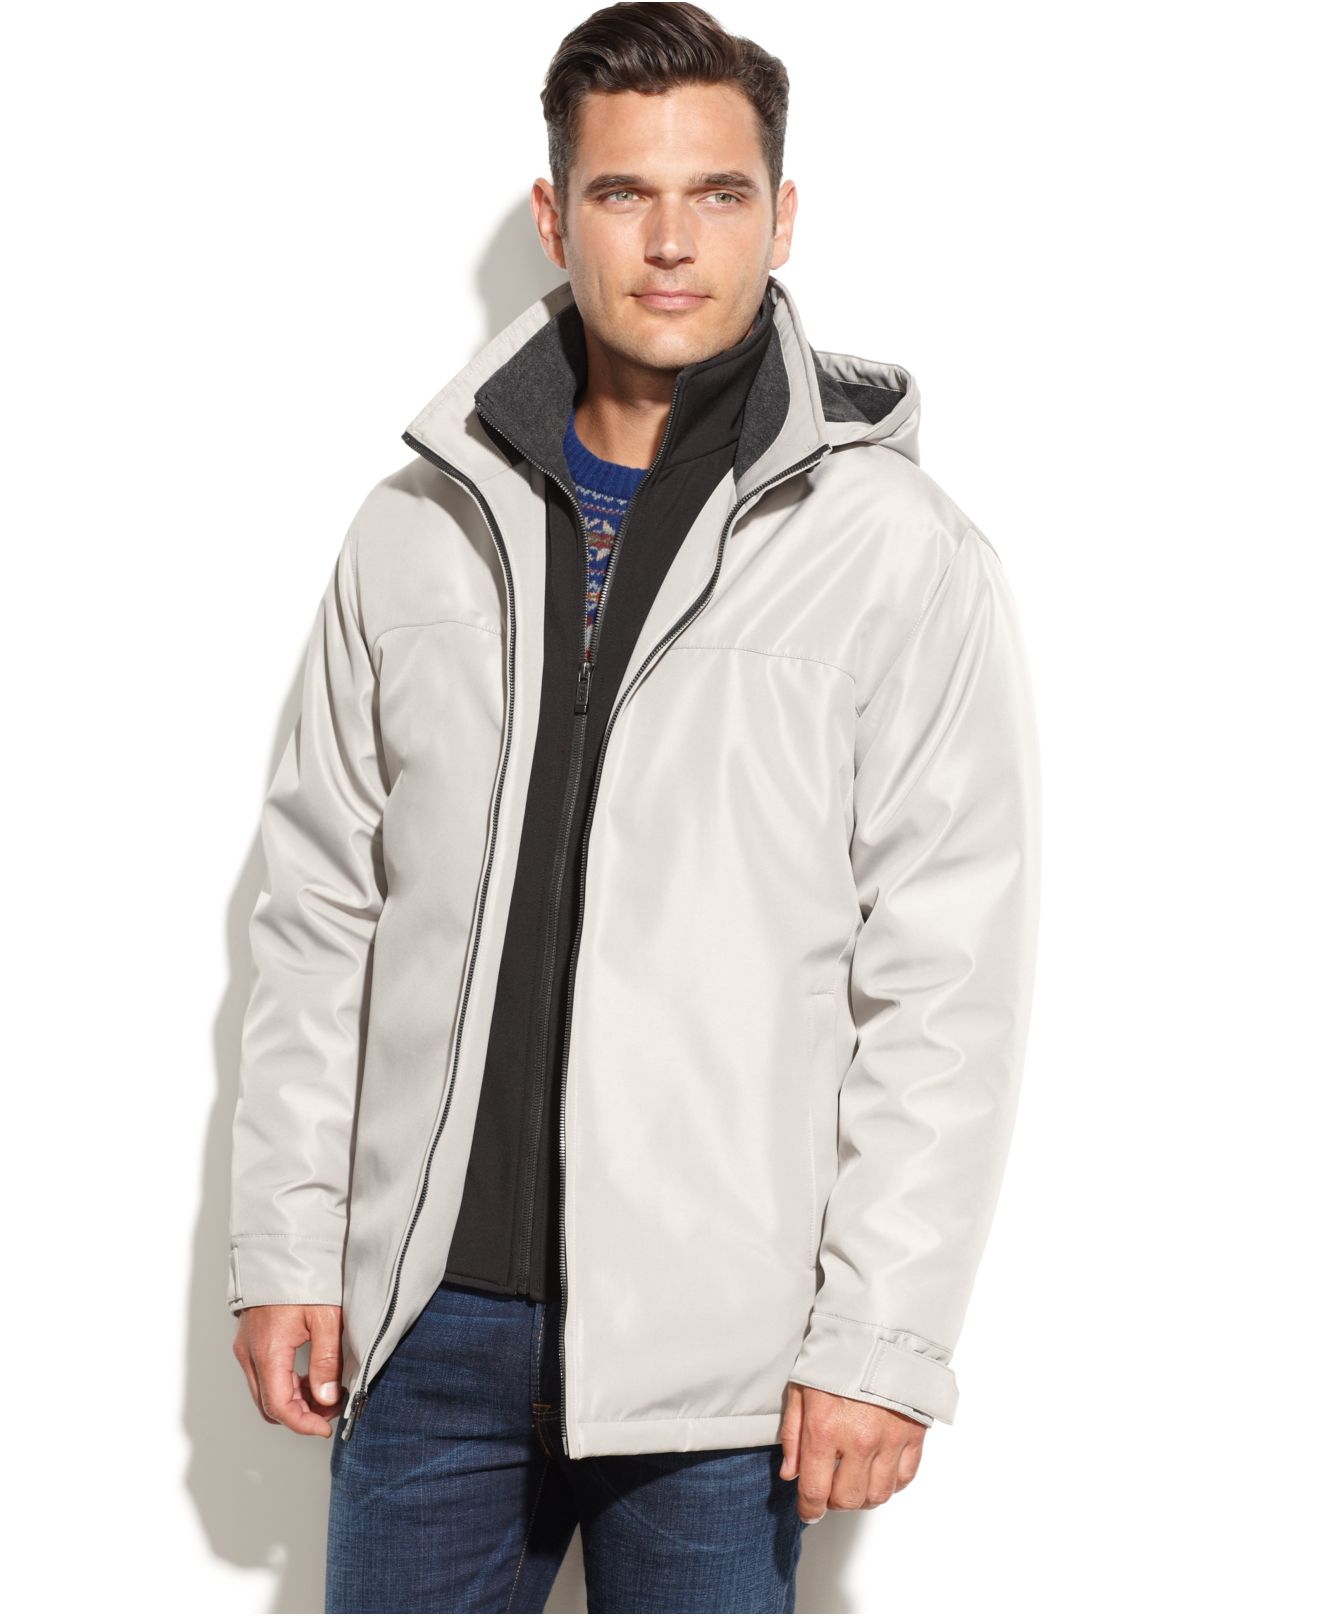 Download Weatherproof Ultra Tech Hooded Jacket With Bib in White ...